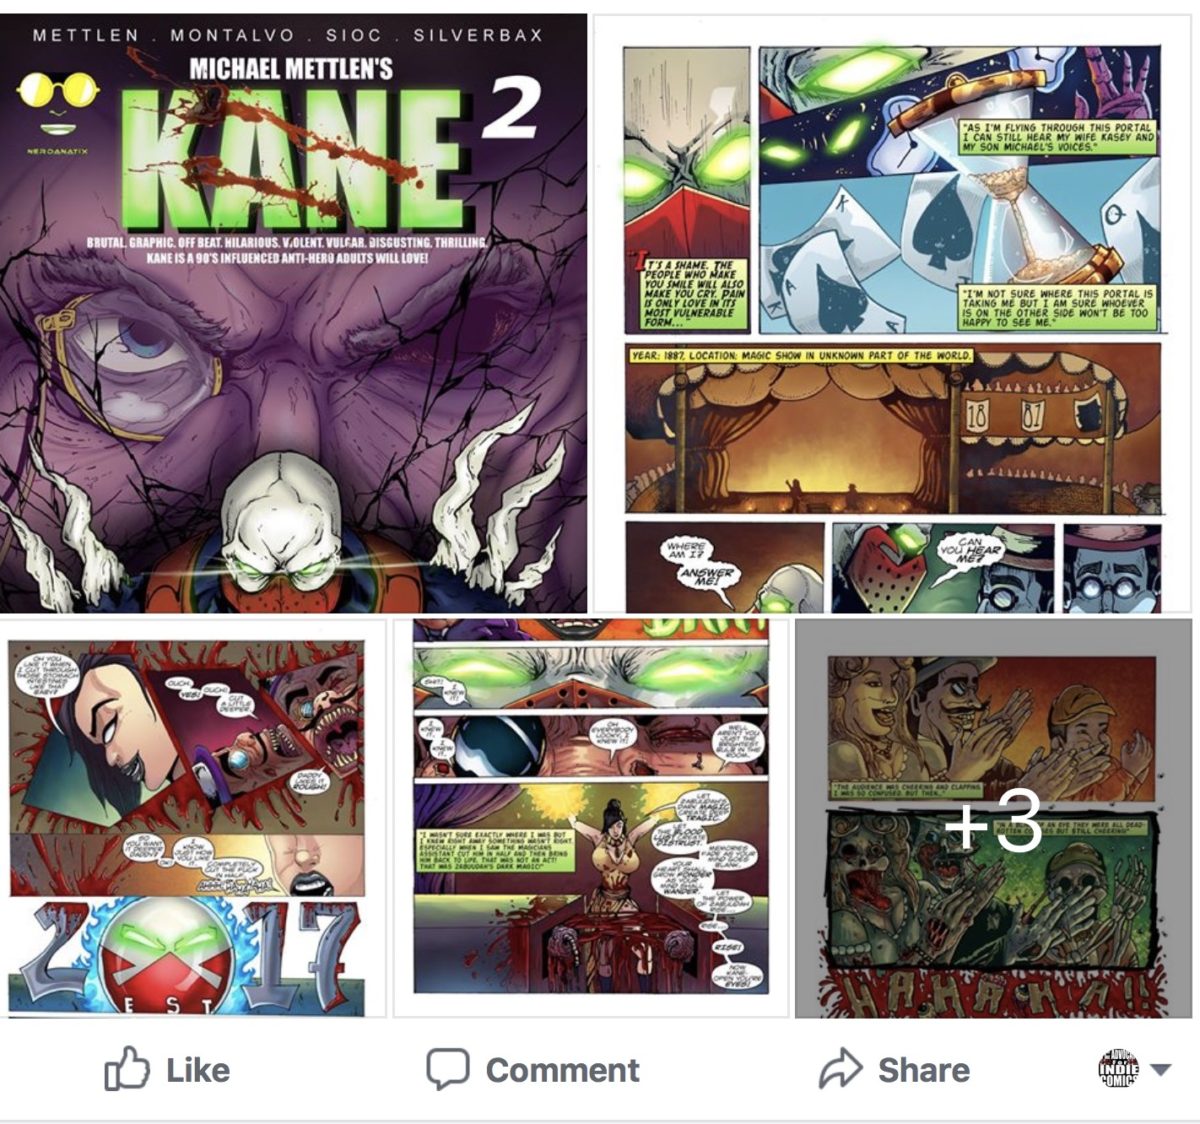 (M)(V) Michael Mettlen’s KANE – comic book series #2 now on SALE  .